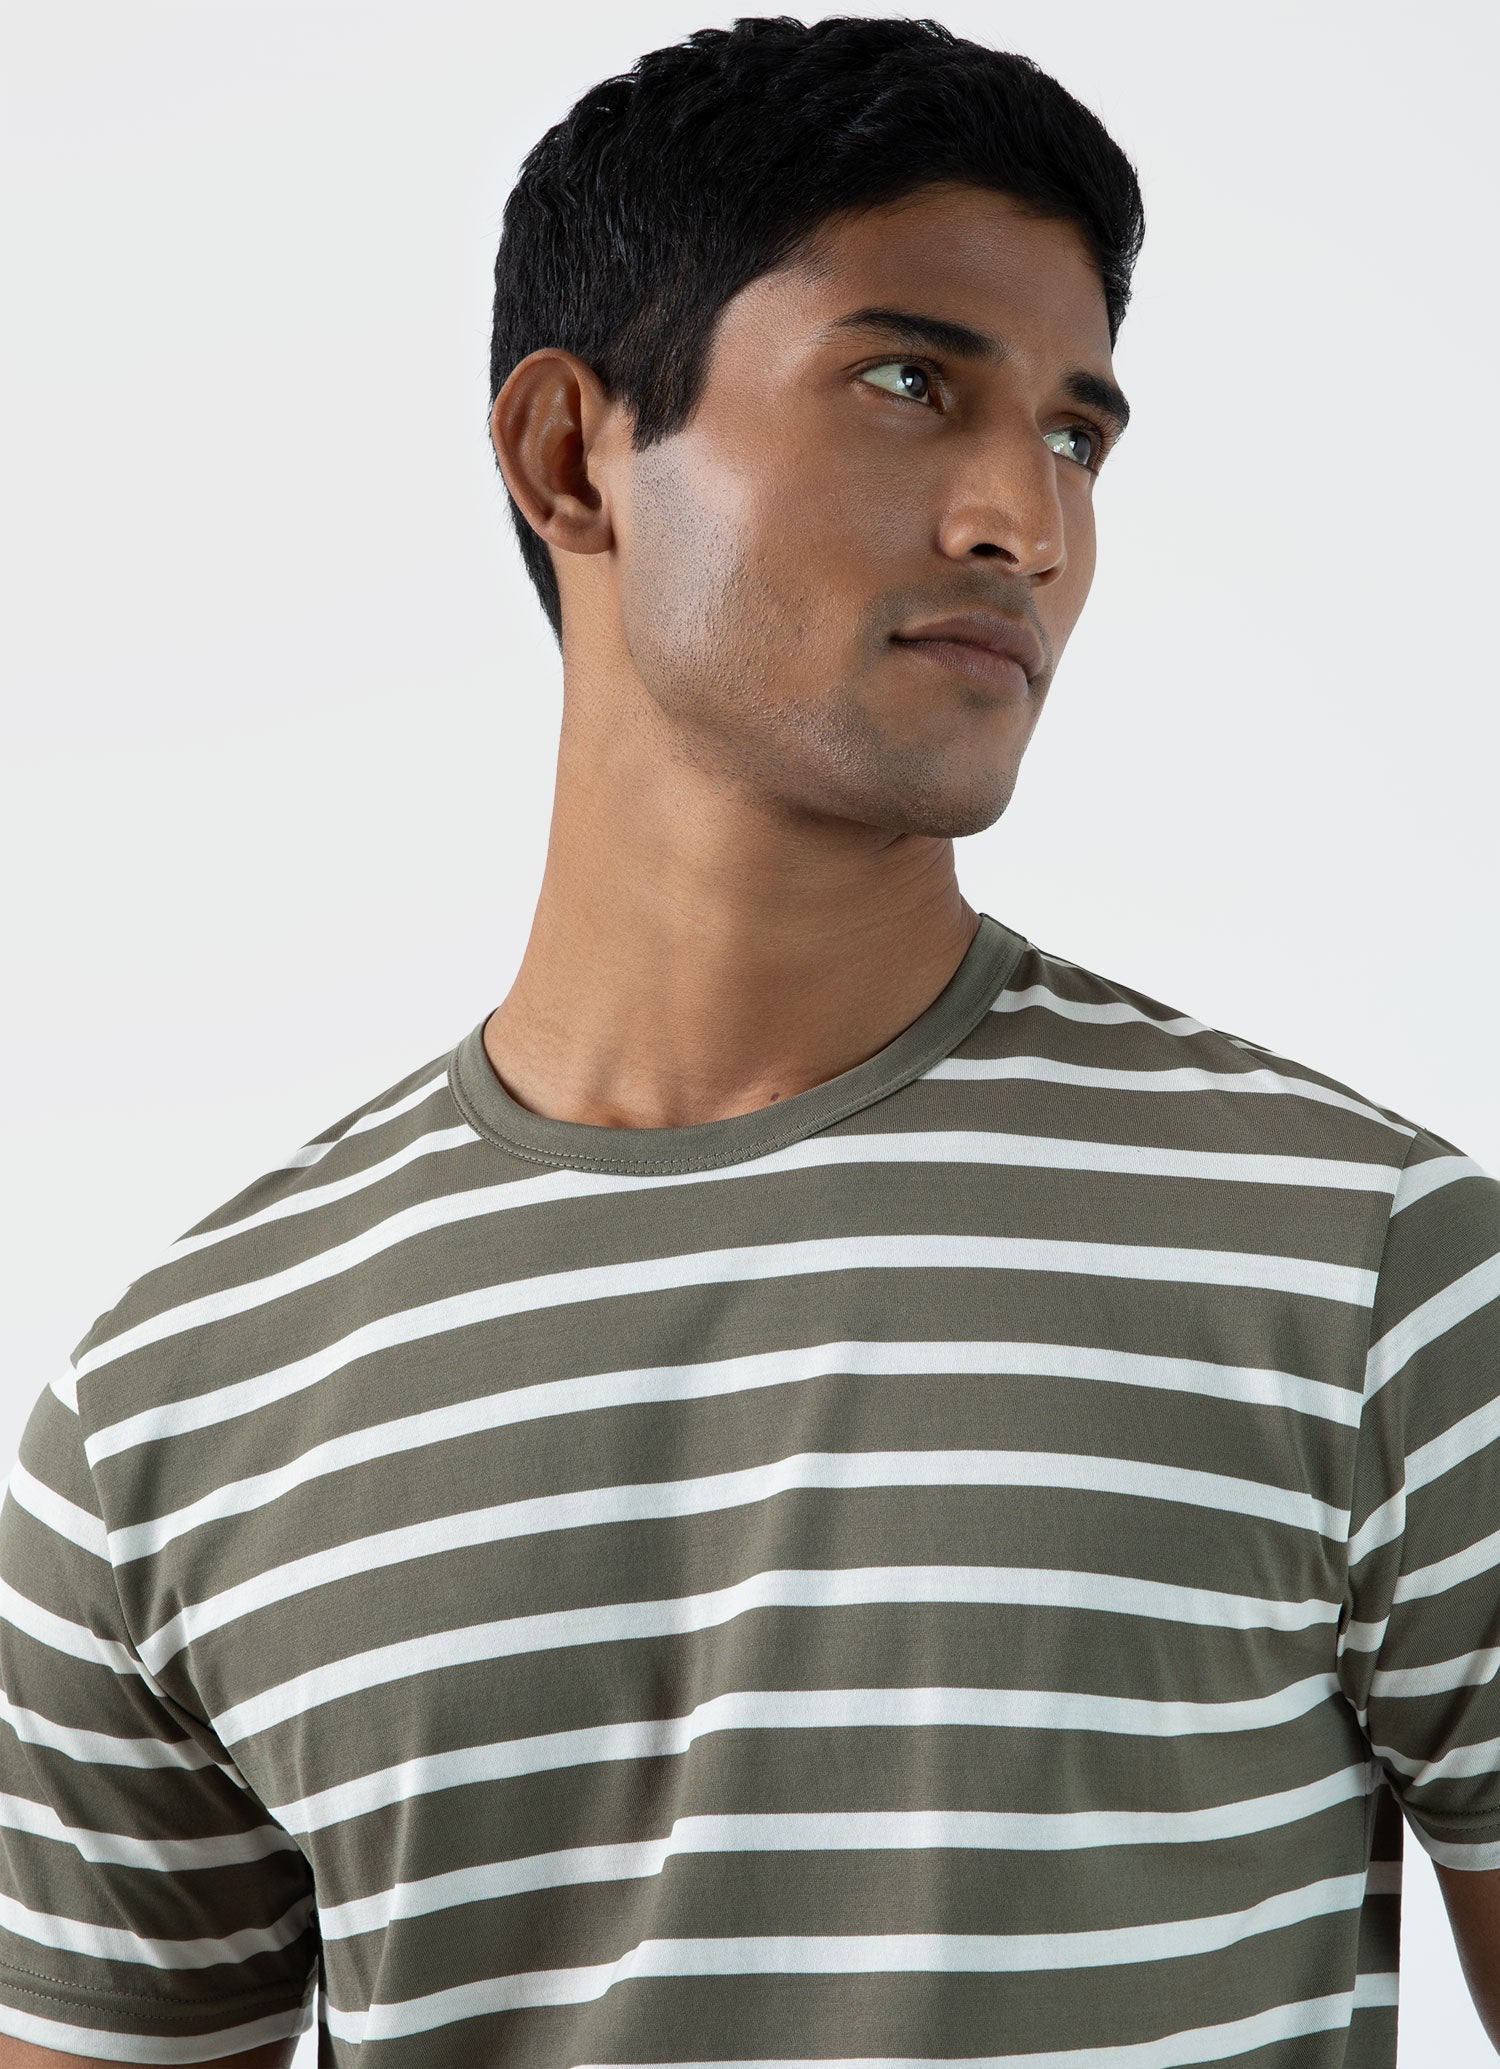 Men's Classic T-shirt in Khaki/Ecru Breton Stripe